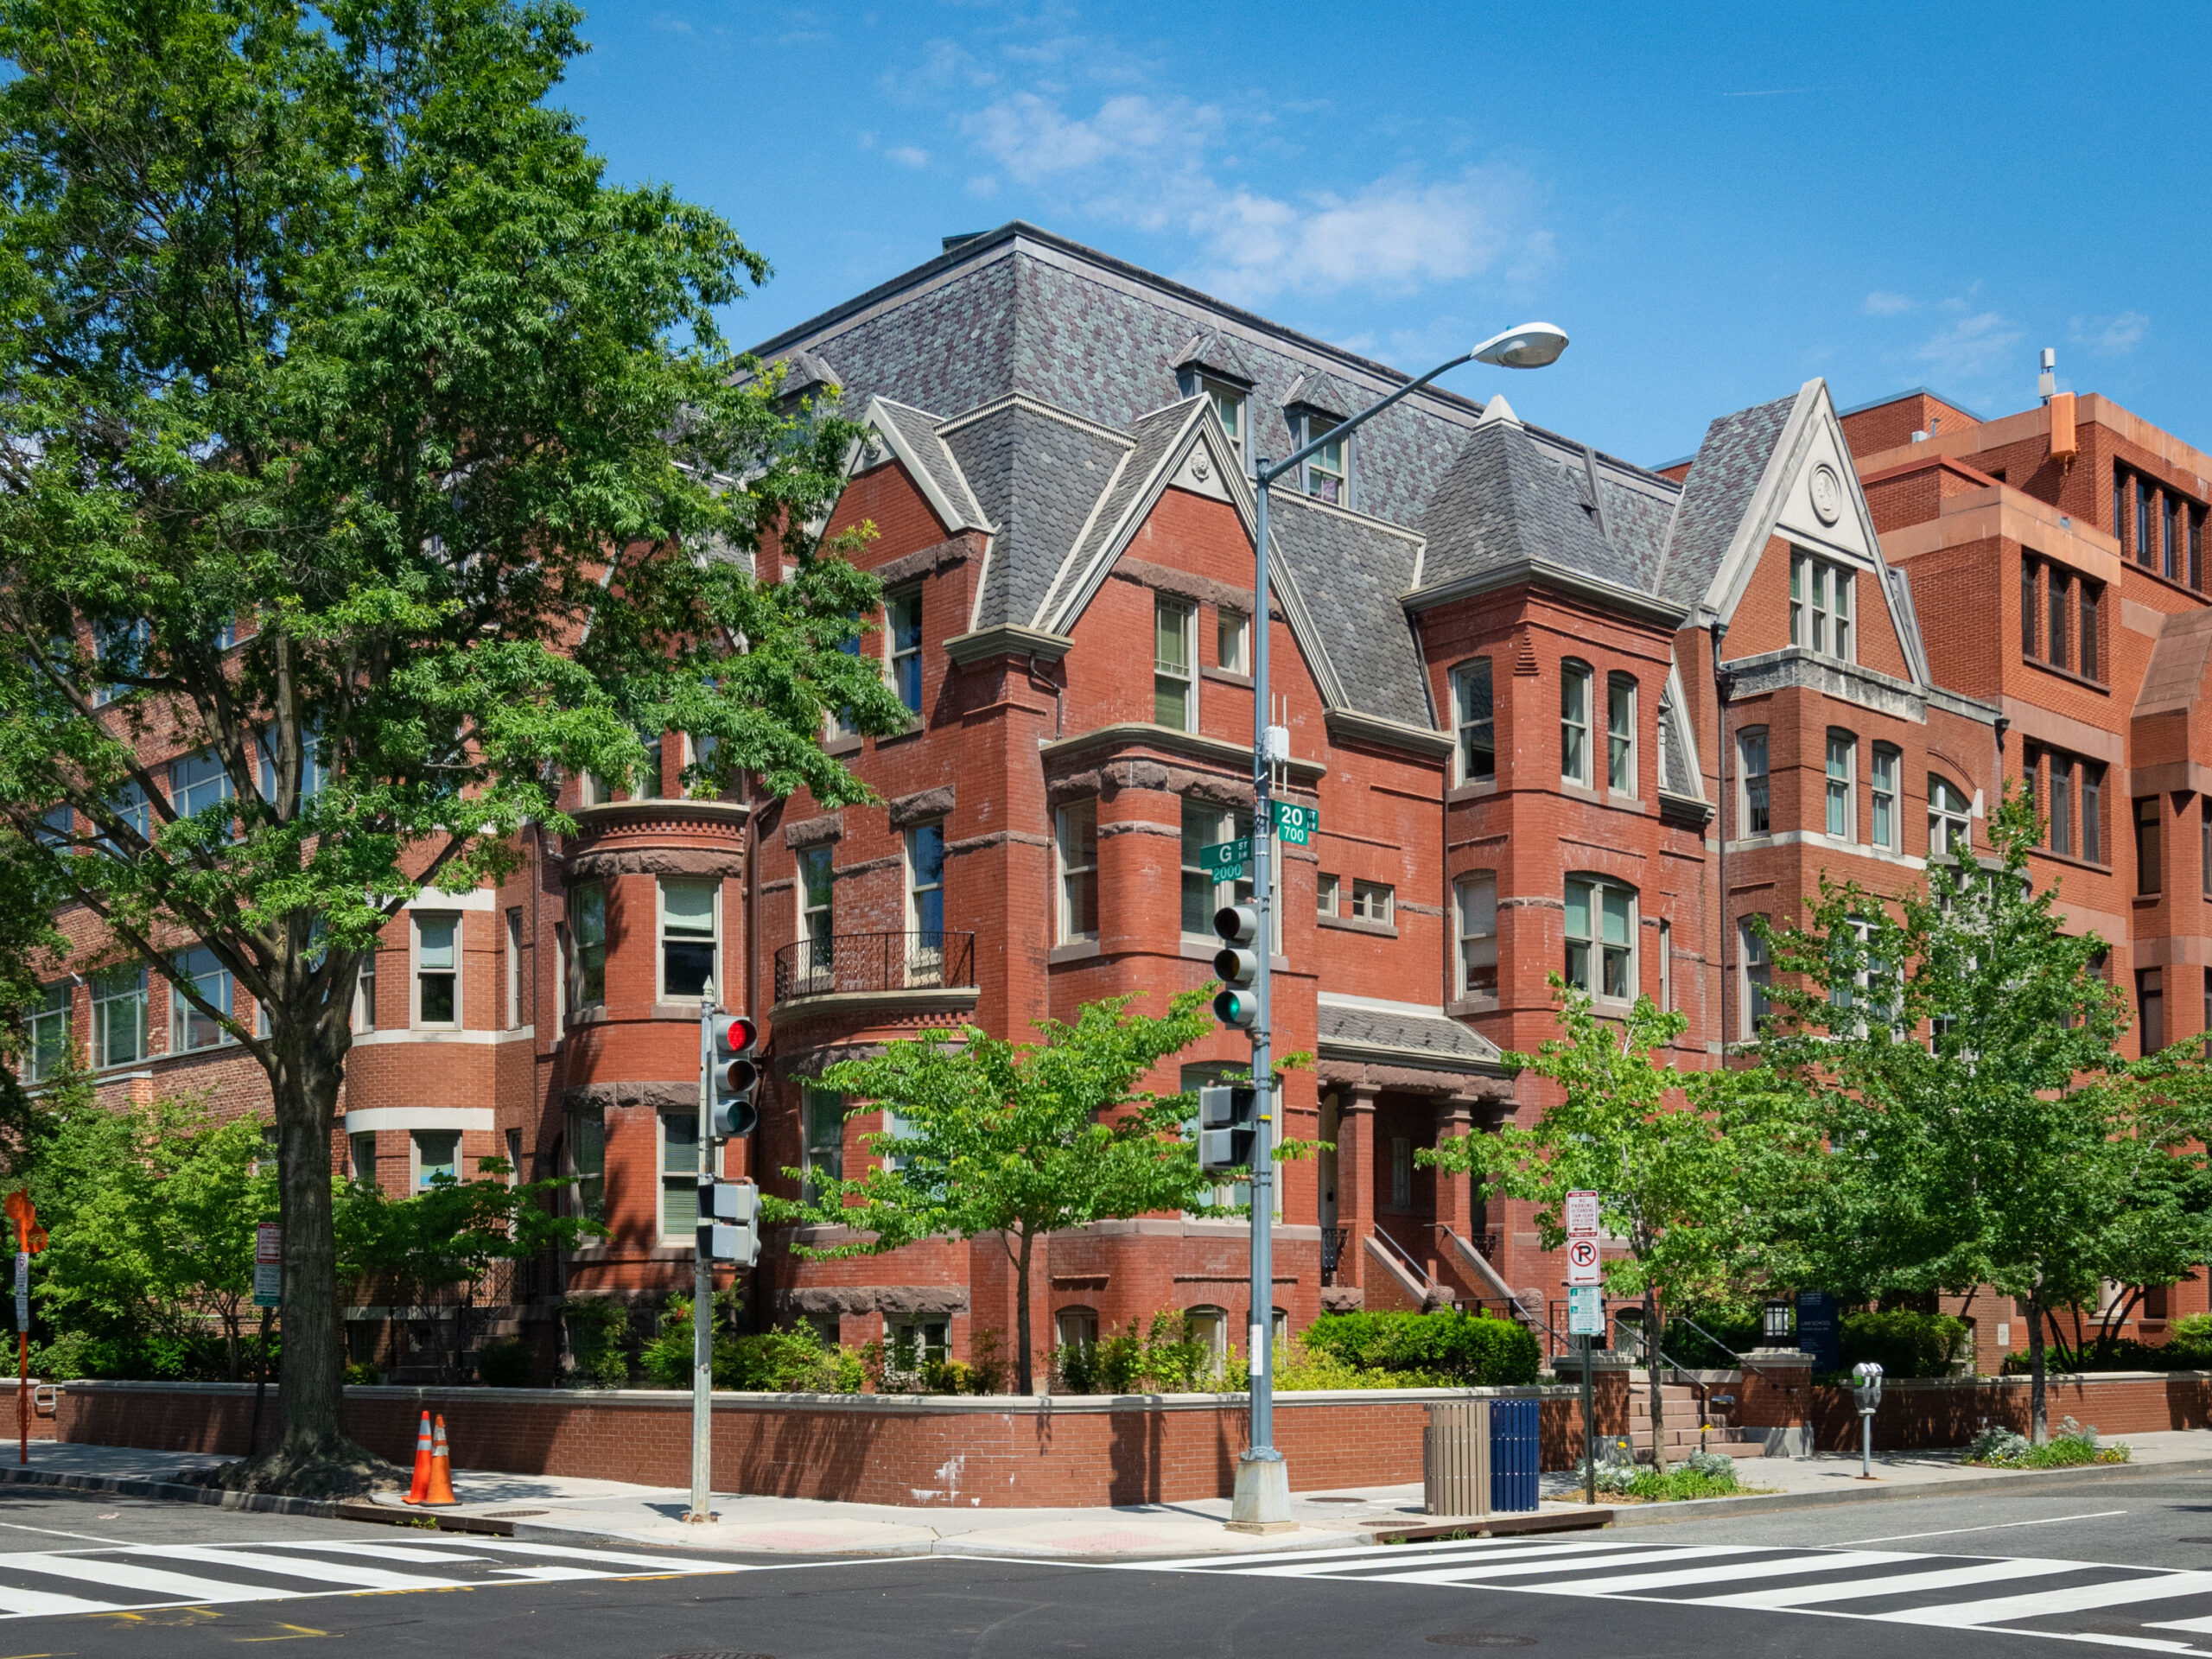 George Washington University Campus, President's Office.